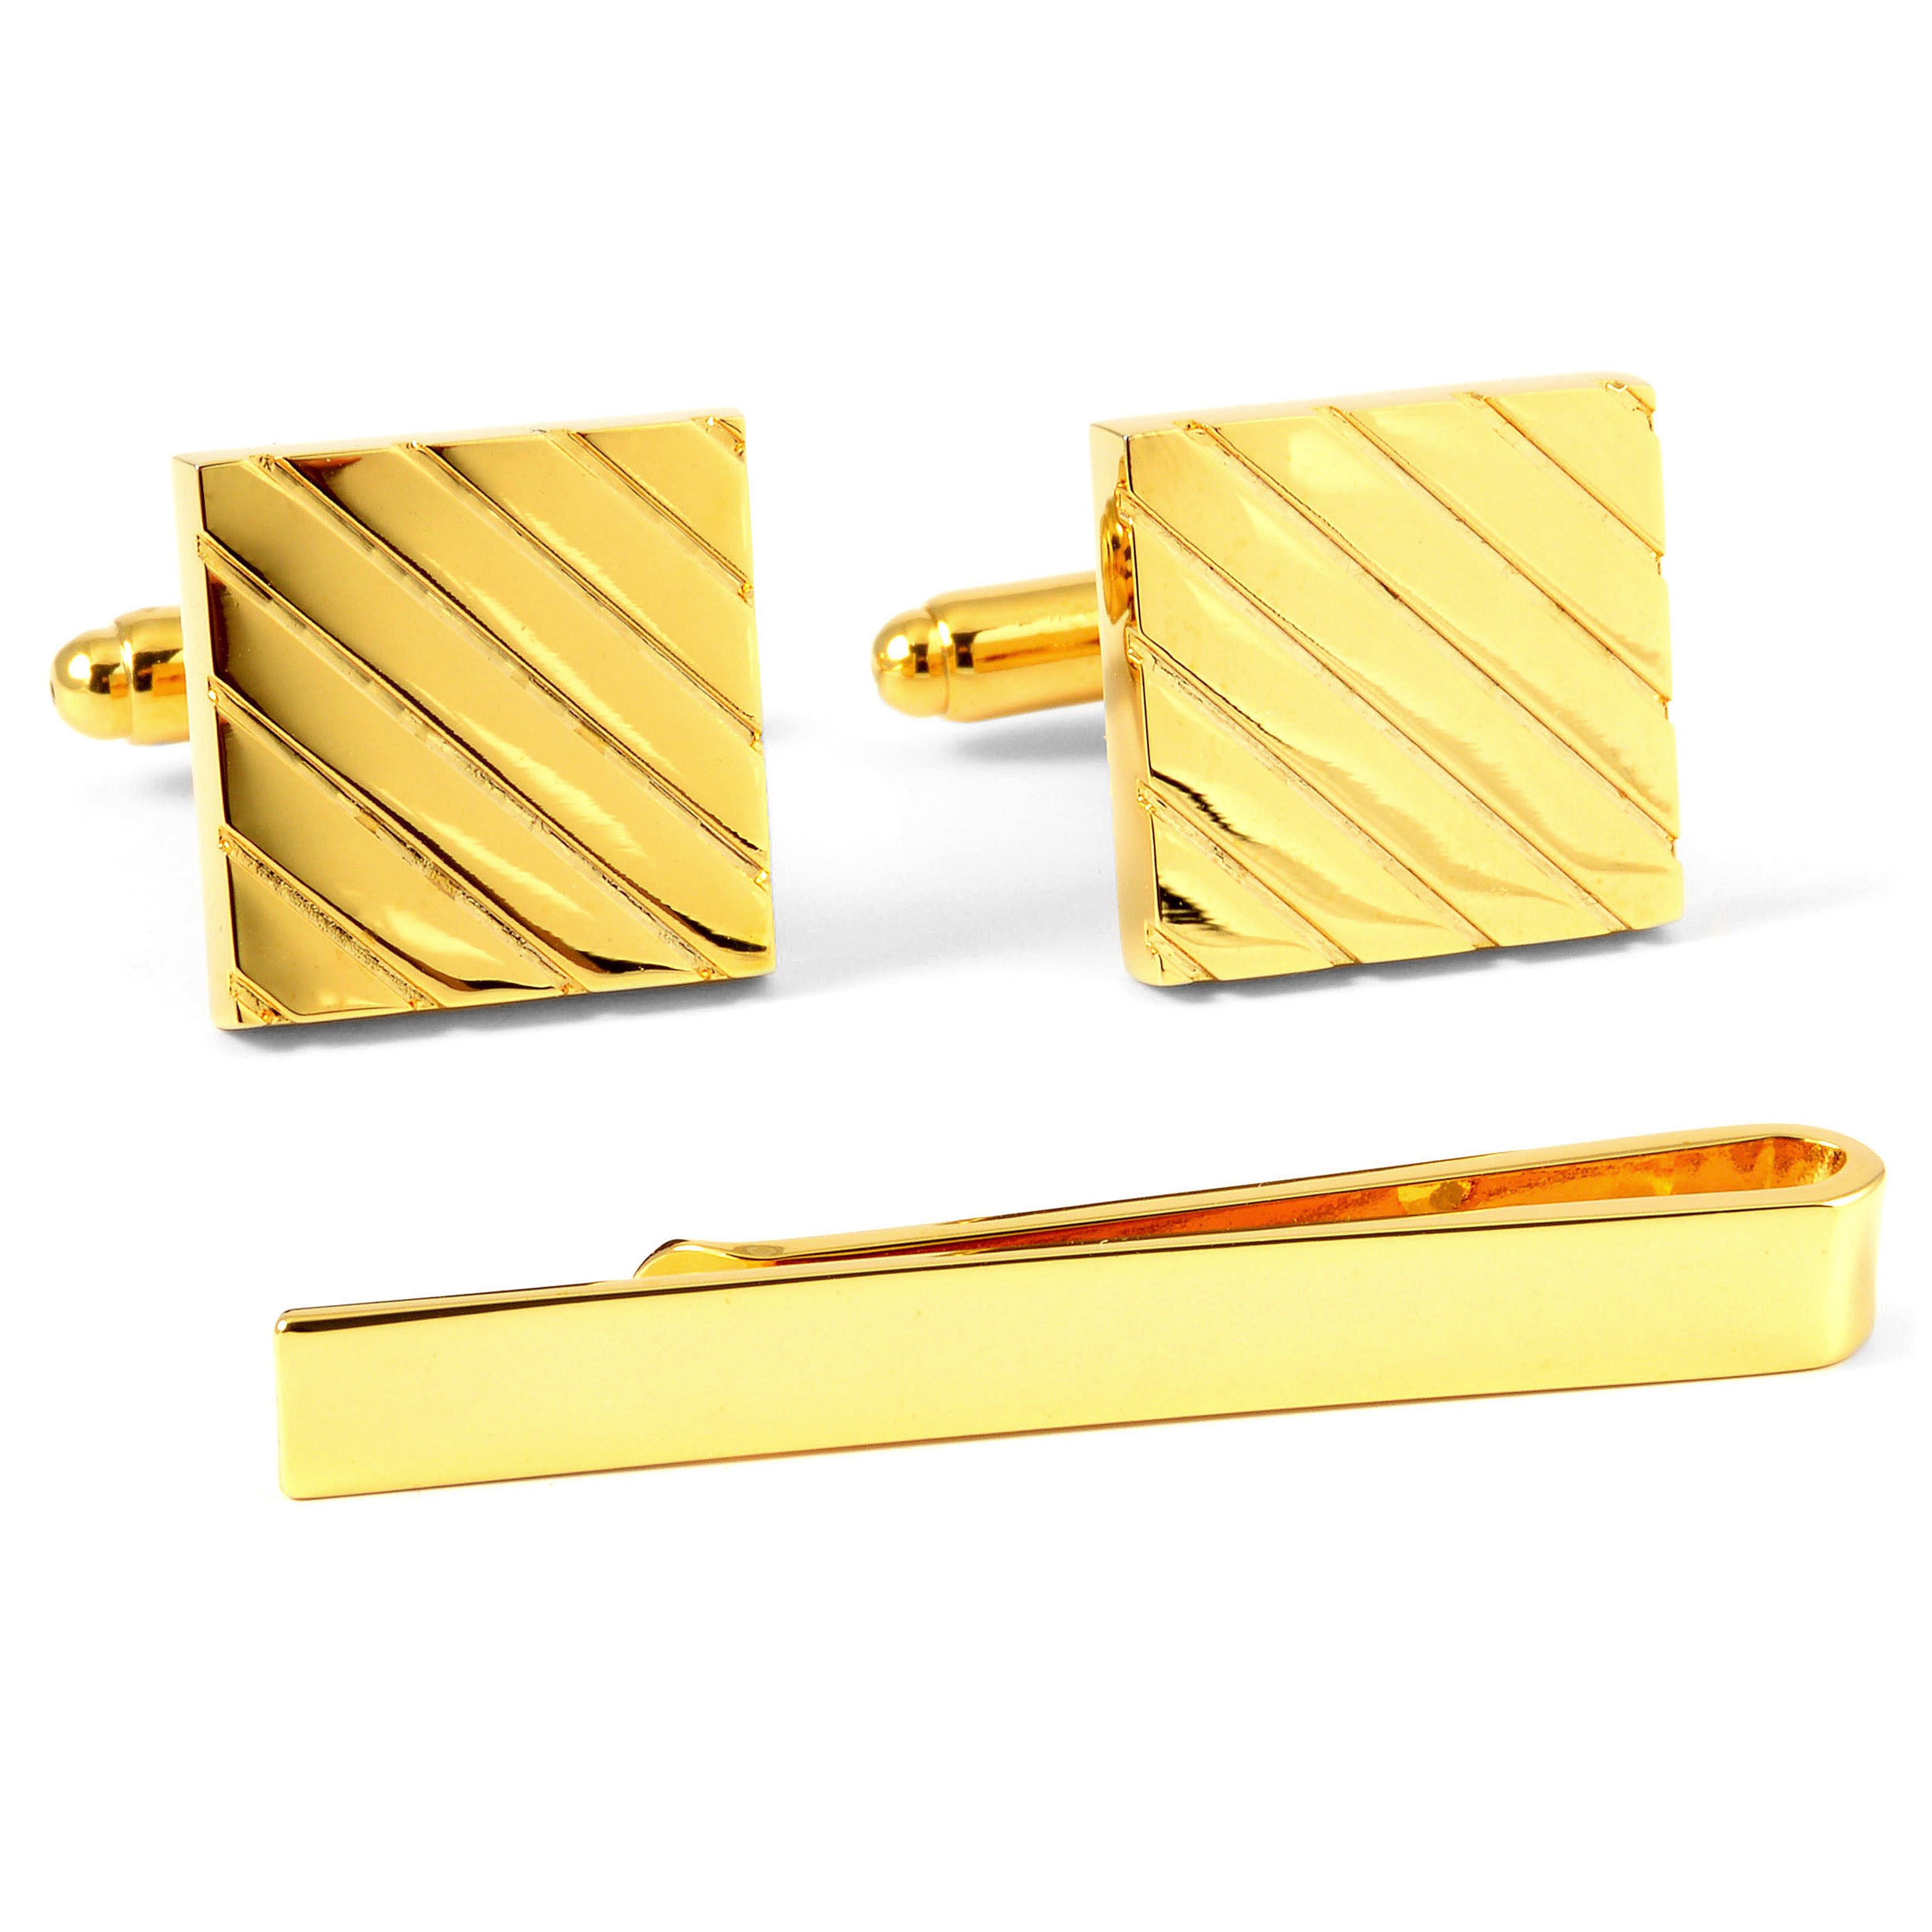 Gold-Tone Cufflinks and Tie Bar Set